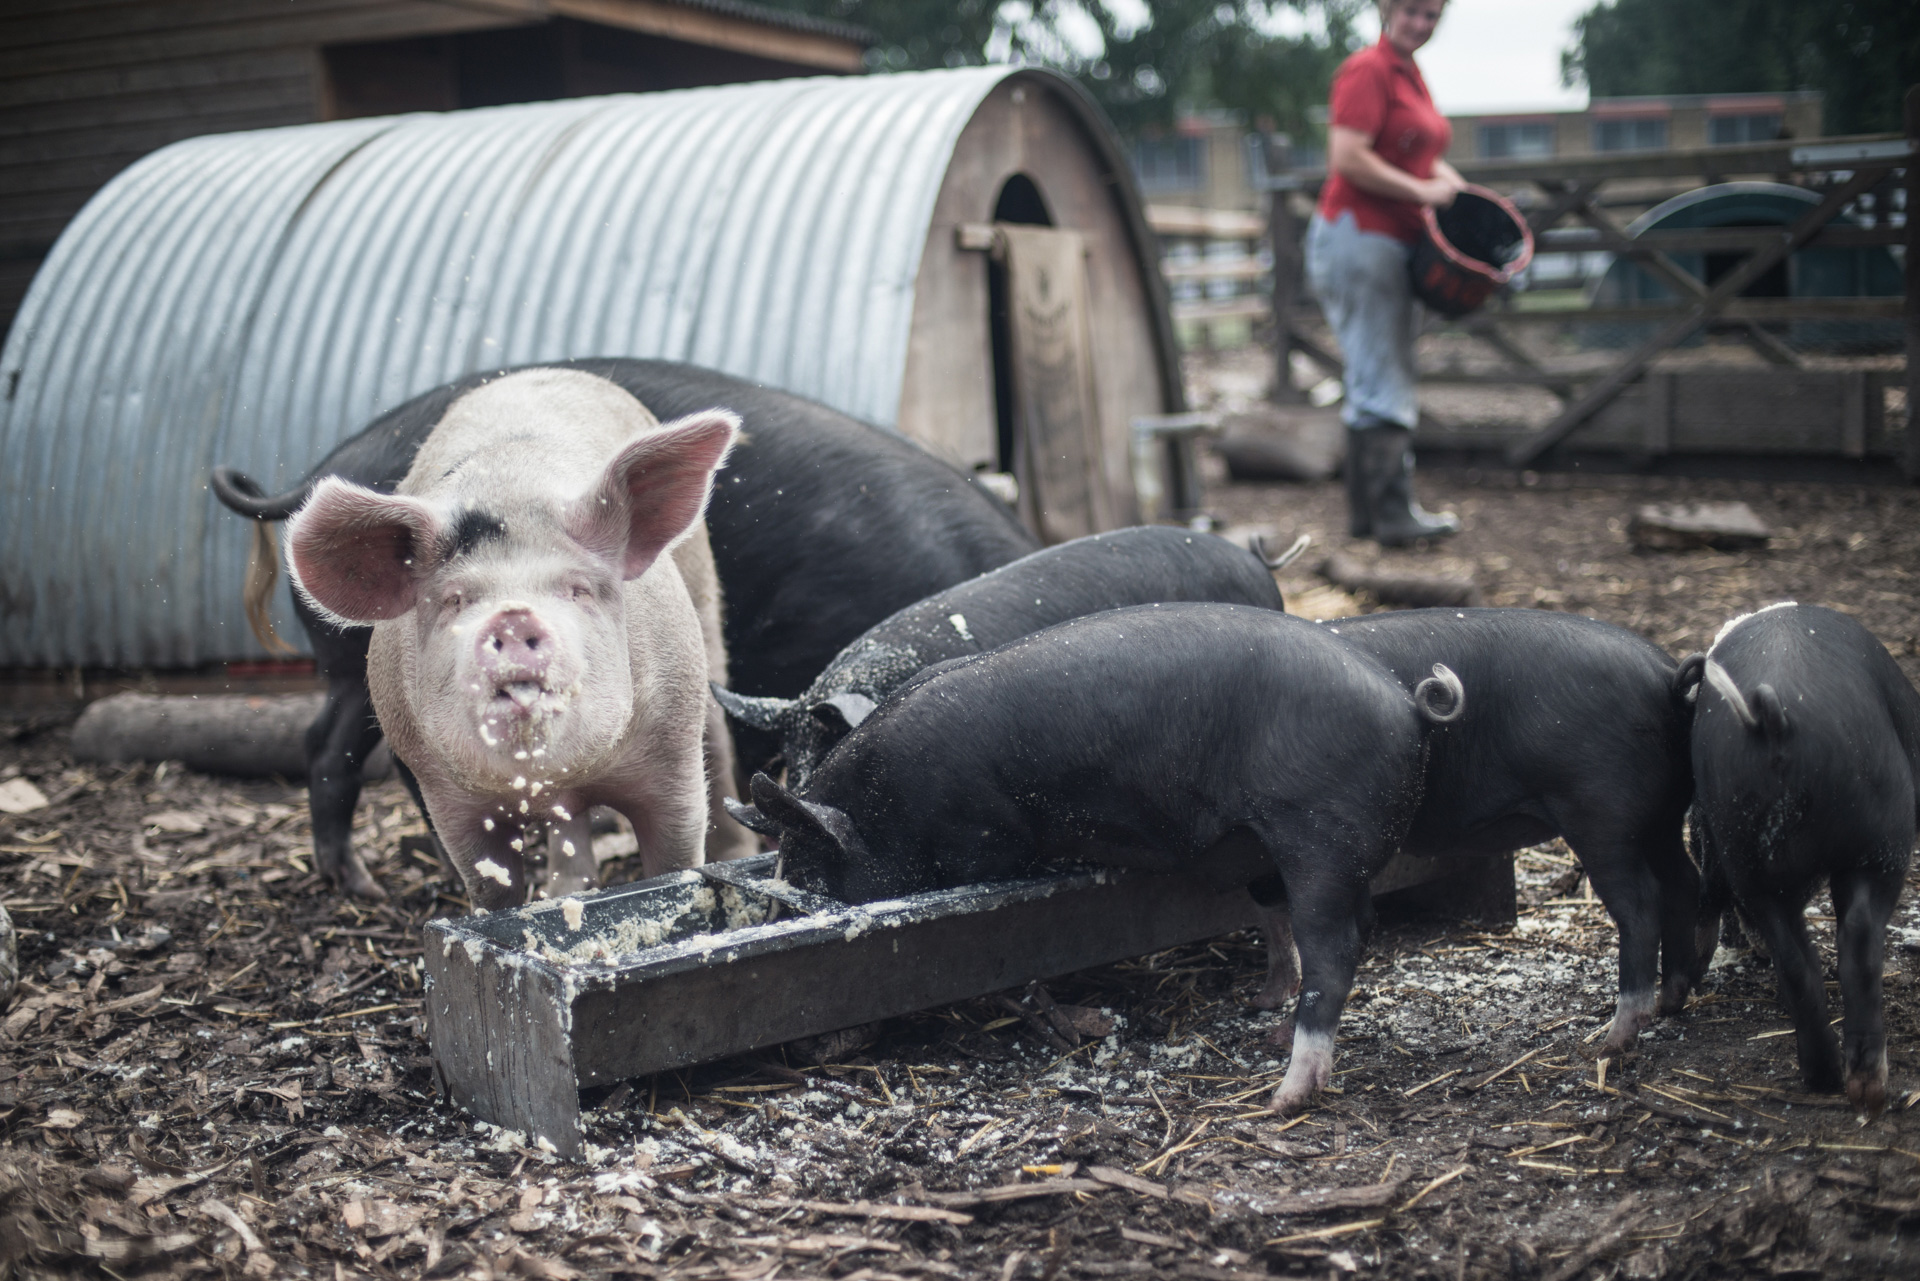 The Pig Idea at Stepney City Farm - Reducing Food Waste - Documentary Photographer Chris King